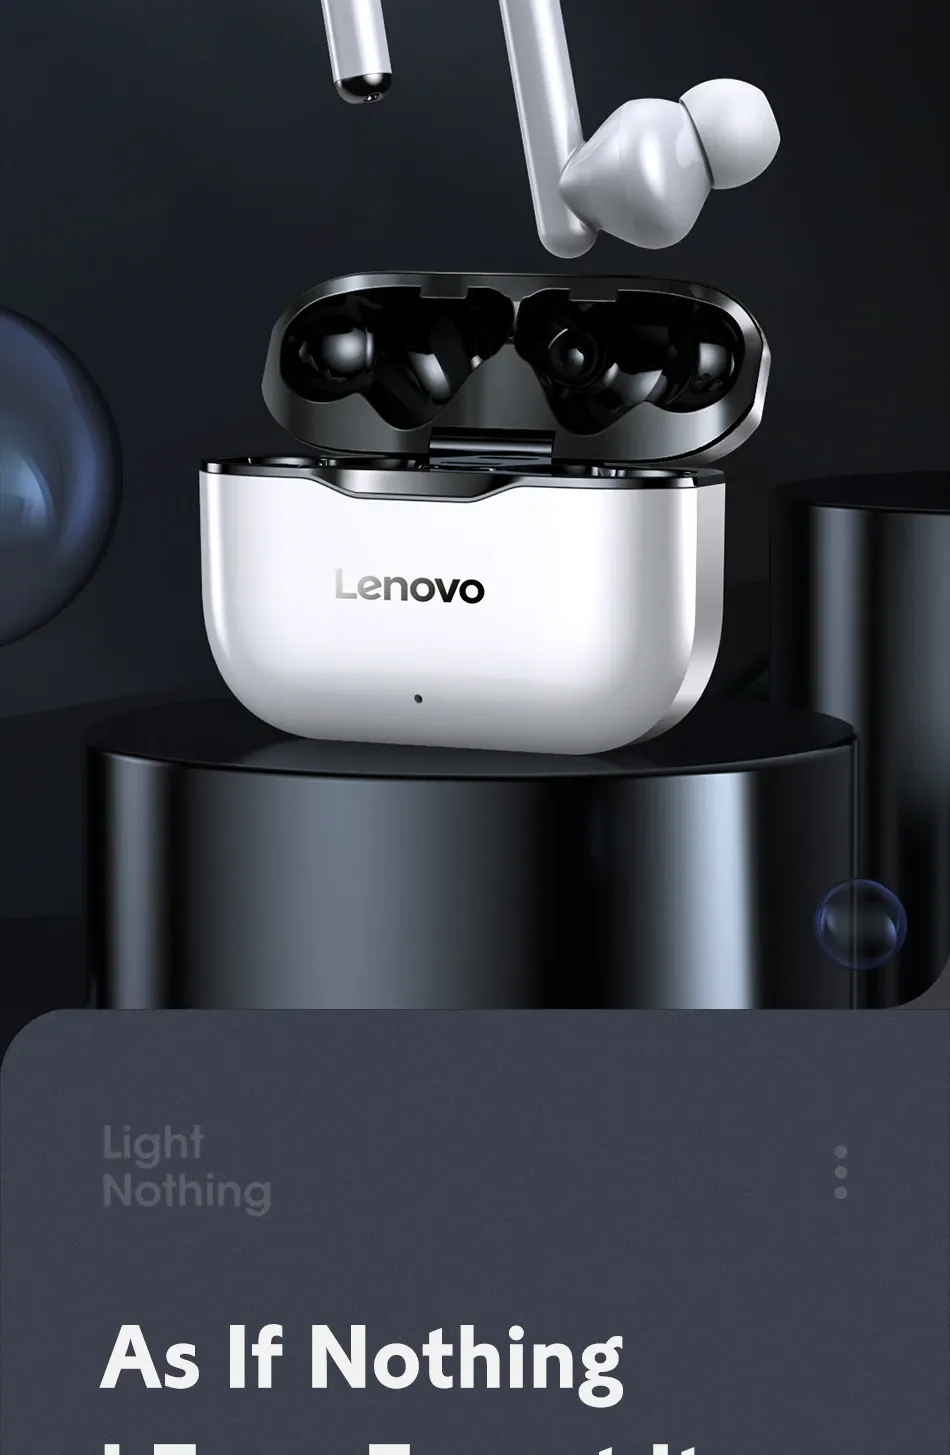 Buy Lenovo Lp1 Earbuds at best price in Pakistan | Rhizmall.pk